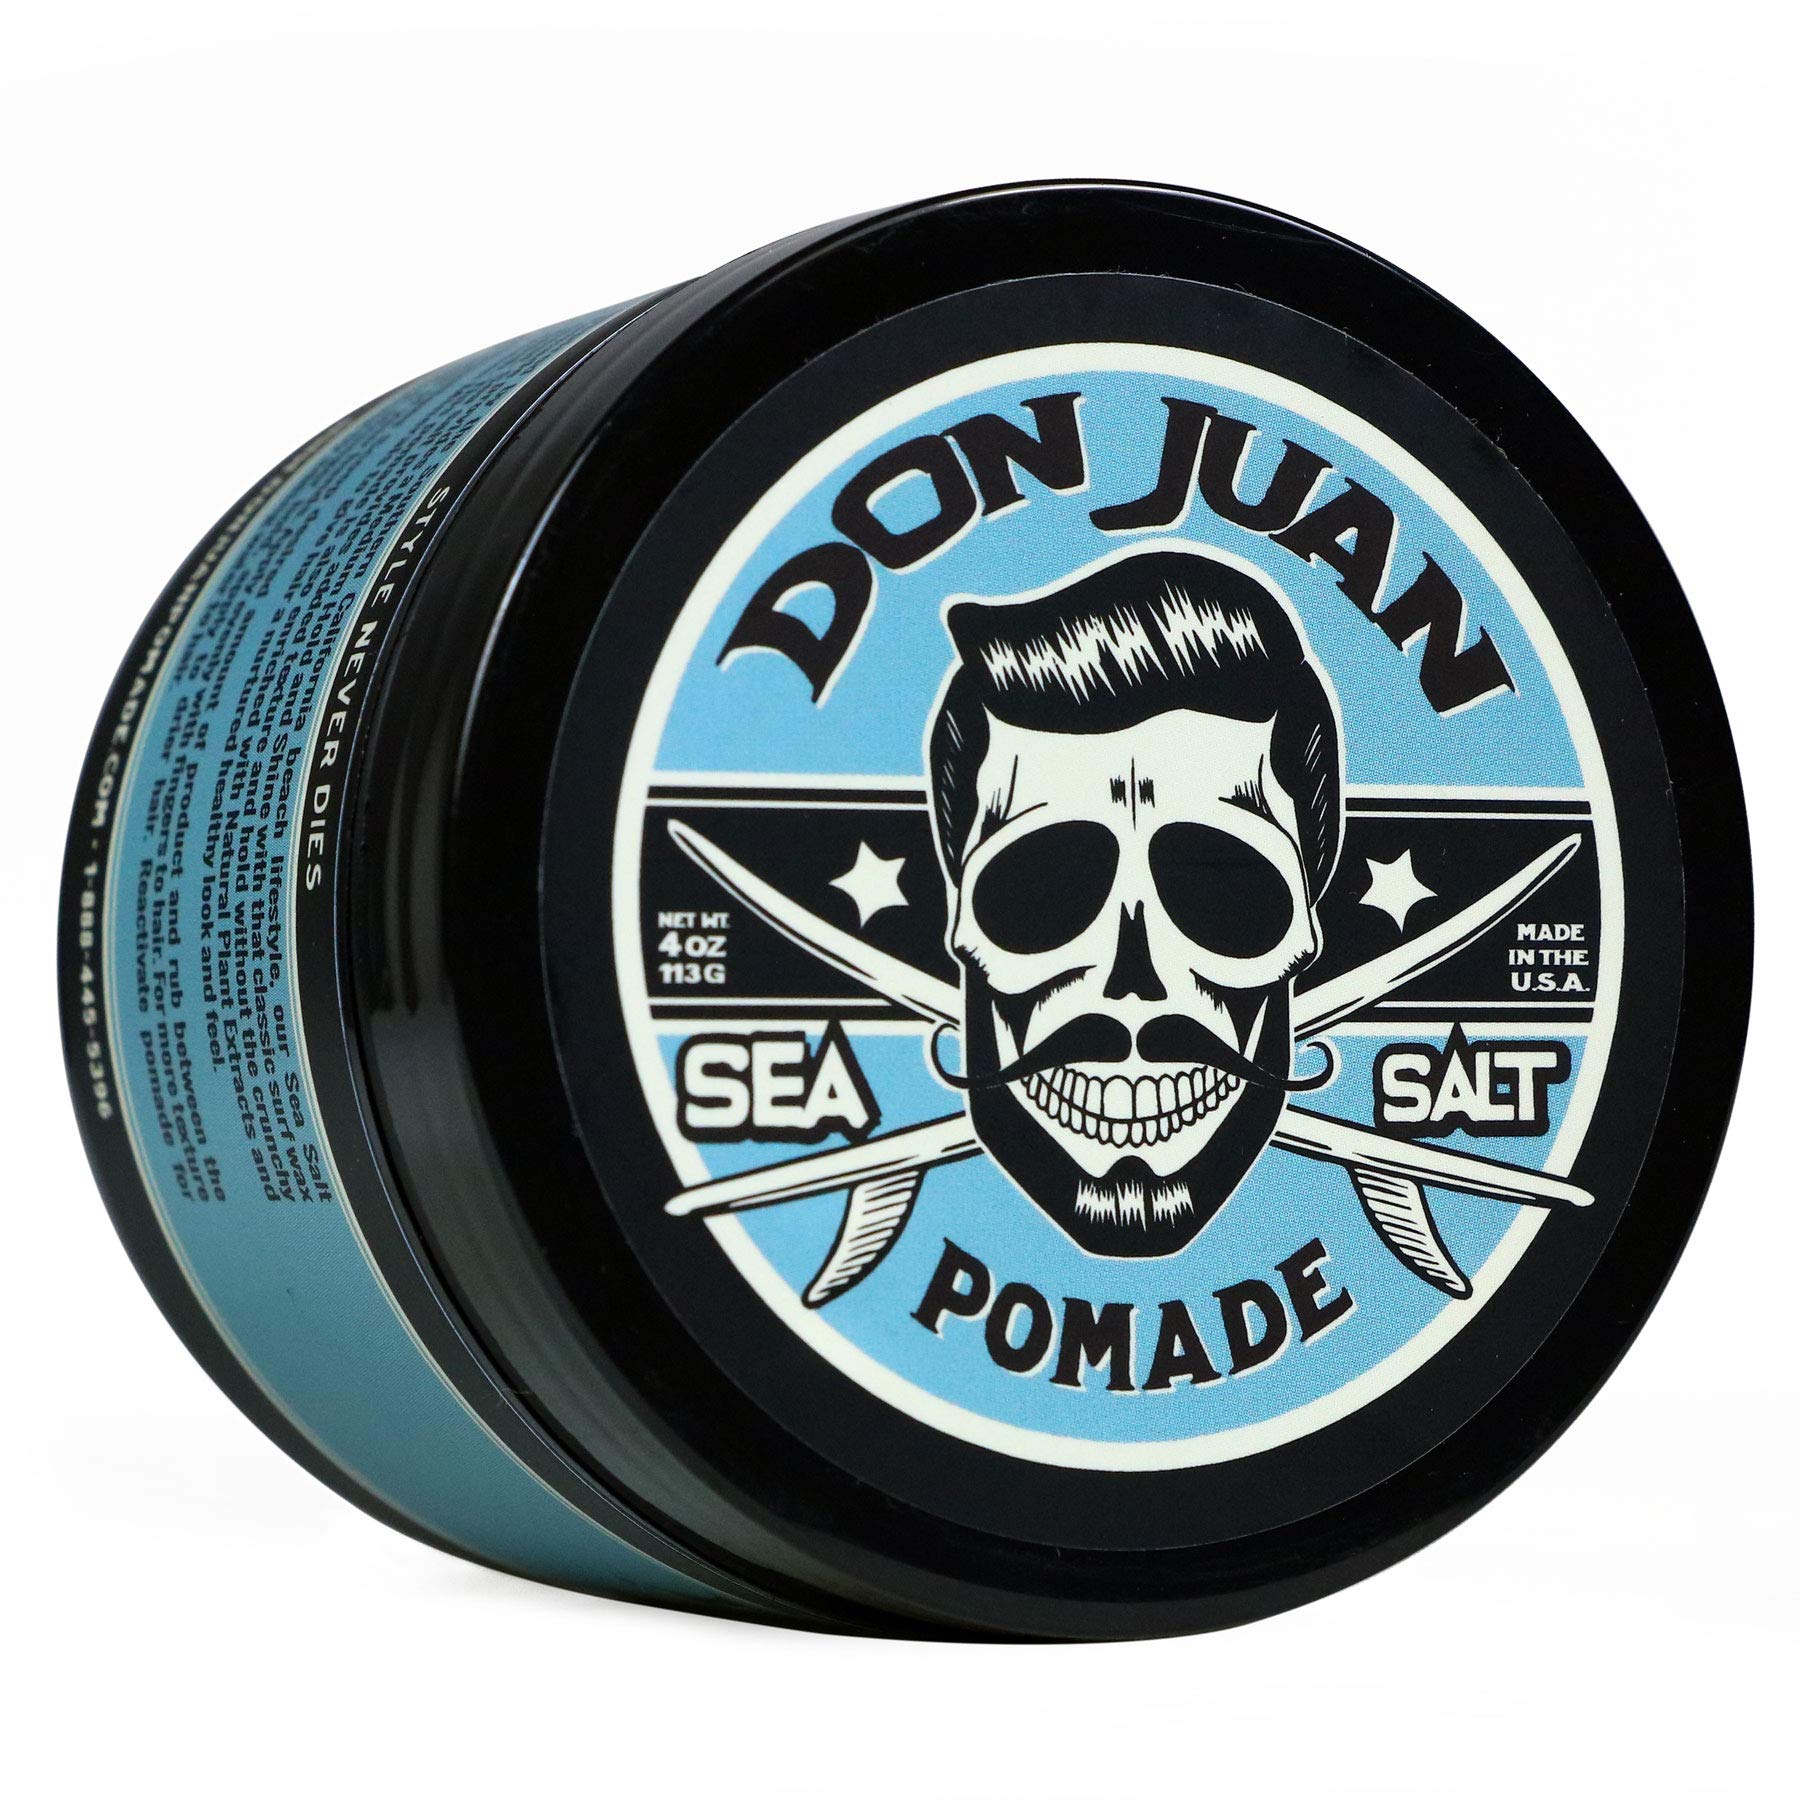 Don Juan Sea Salt Hair Style Surf Spray 8 fl oz